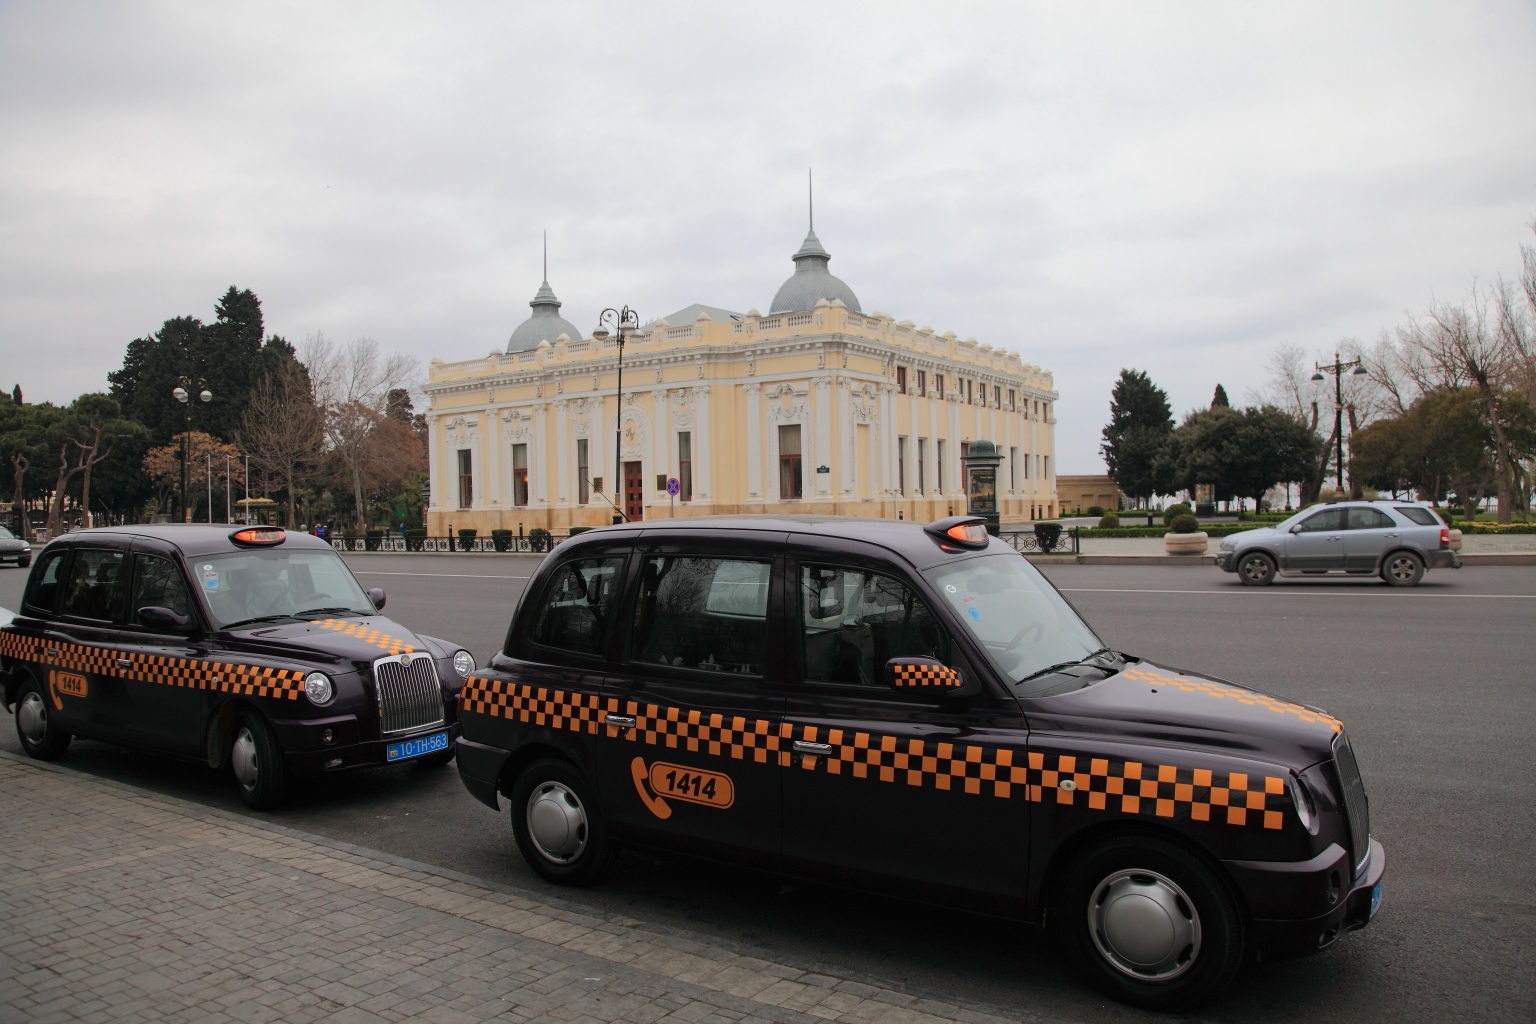 Такси в азербайджане. Такси в Баку баклажан. Такси баклажан в Азербайджане. Такси Азербайджан Баку. Такси в Баку баклажан марка машины.